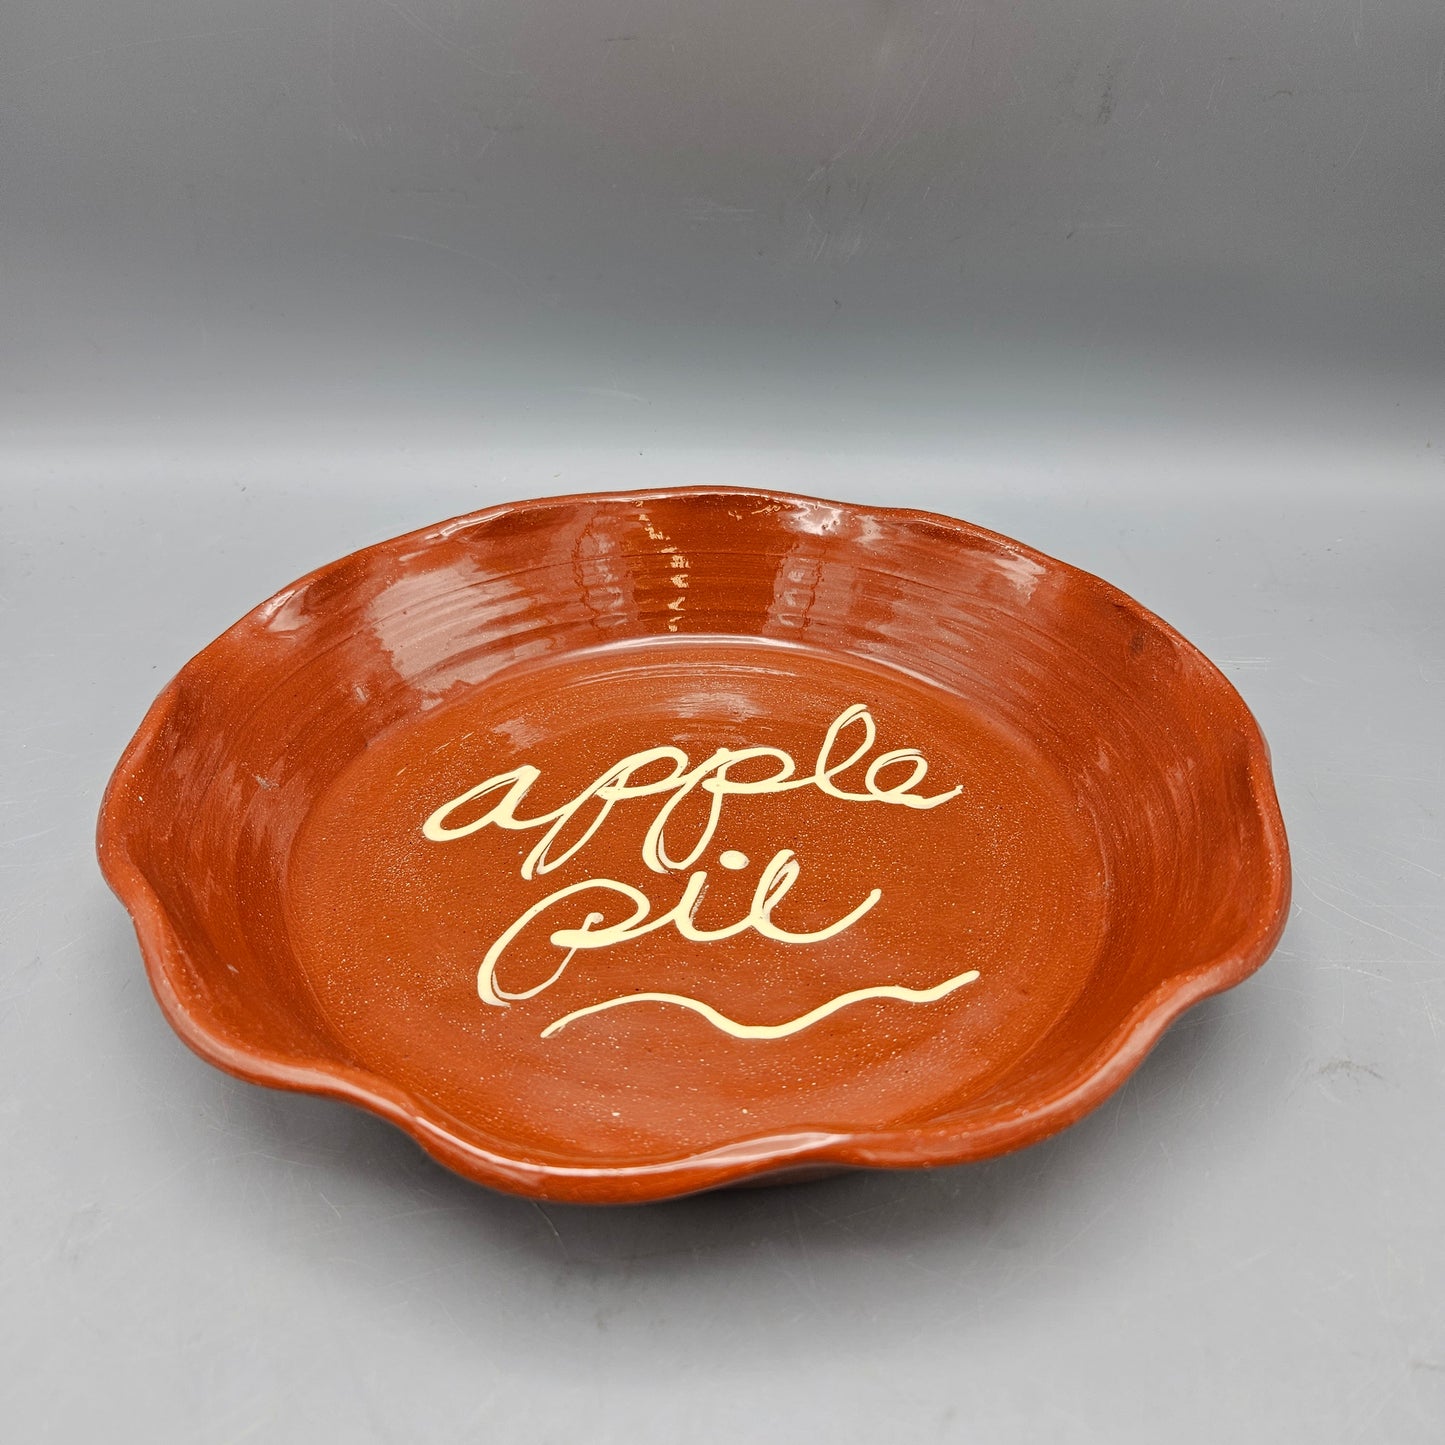 Signed Redwre Apple Pie Dish 1984